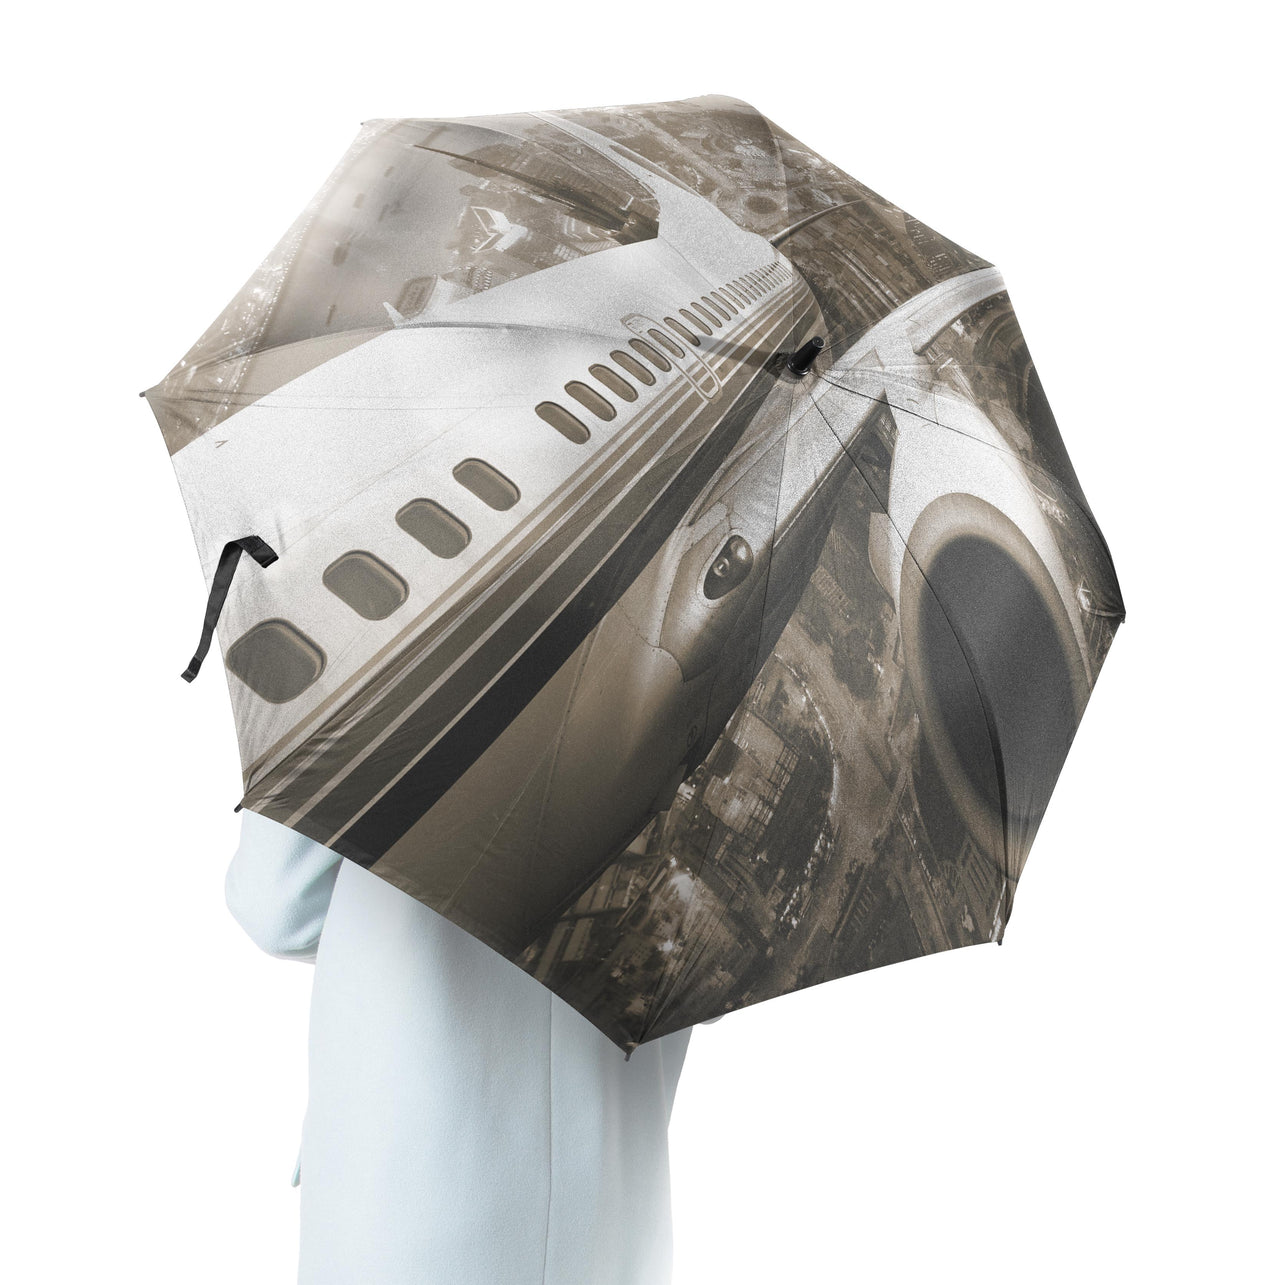 Departing Aircraft & City Scene behind Designed Umbrella